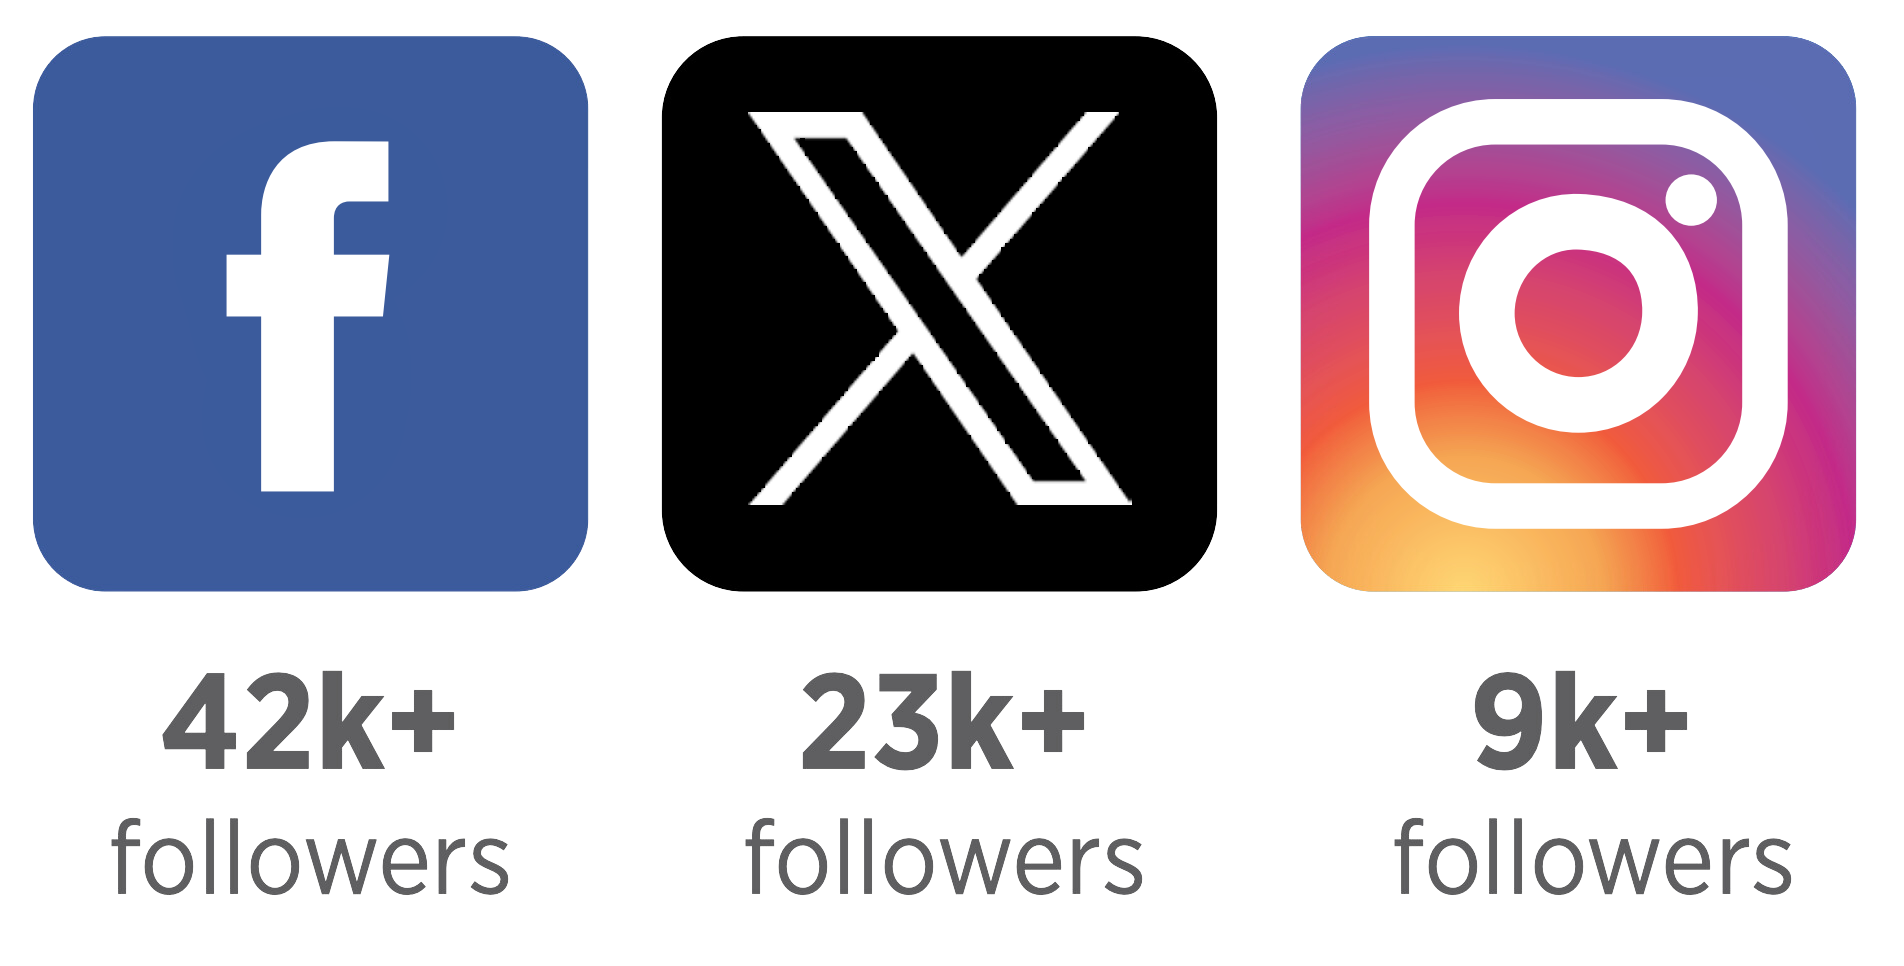 social media followers: 42k+ facebook followers, 23k+ twitter followers, 9k+ instagram followers